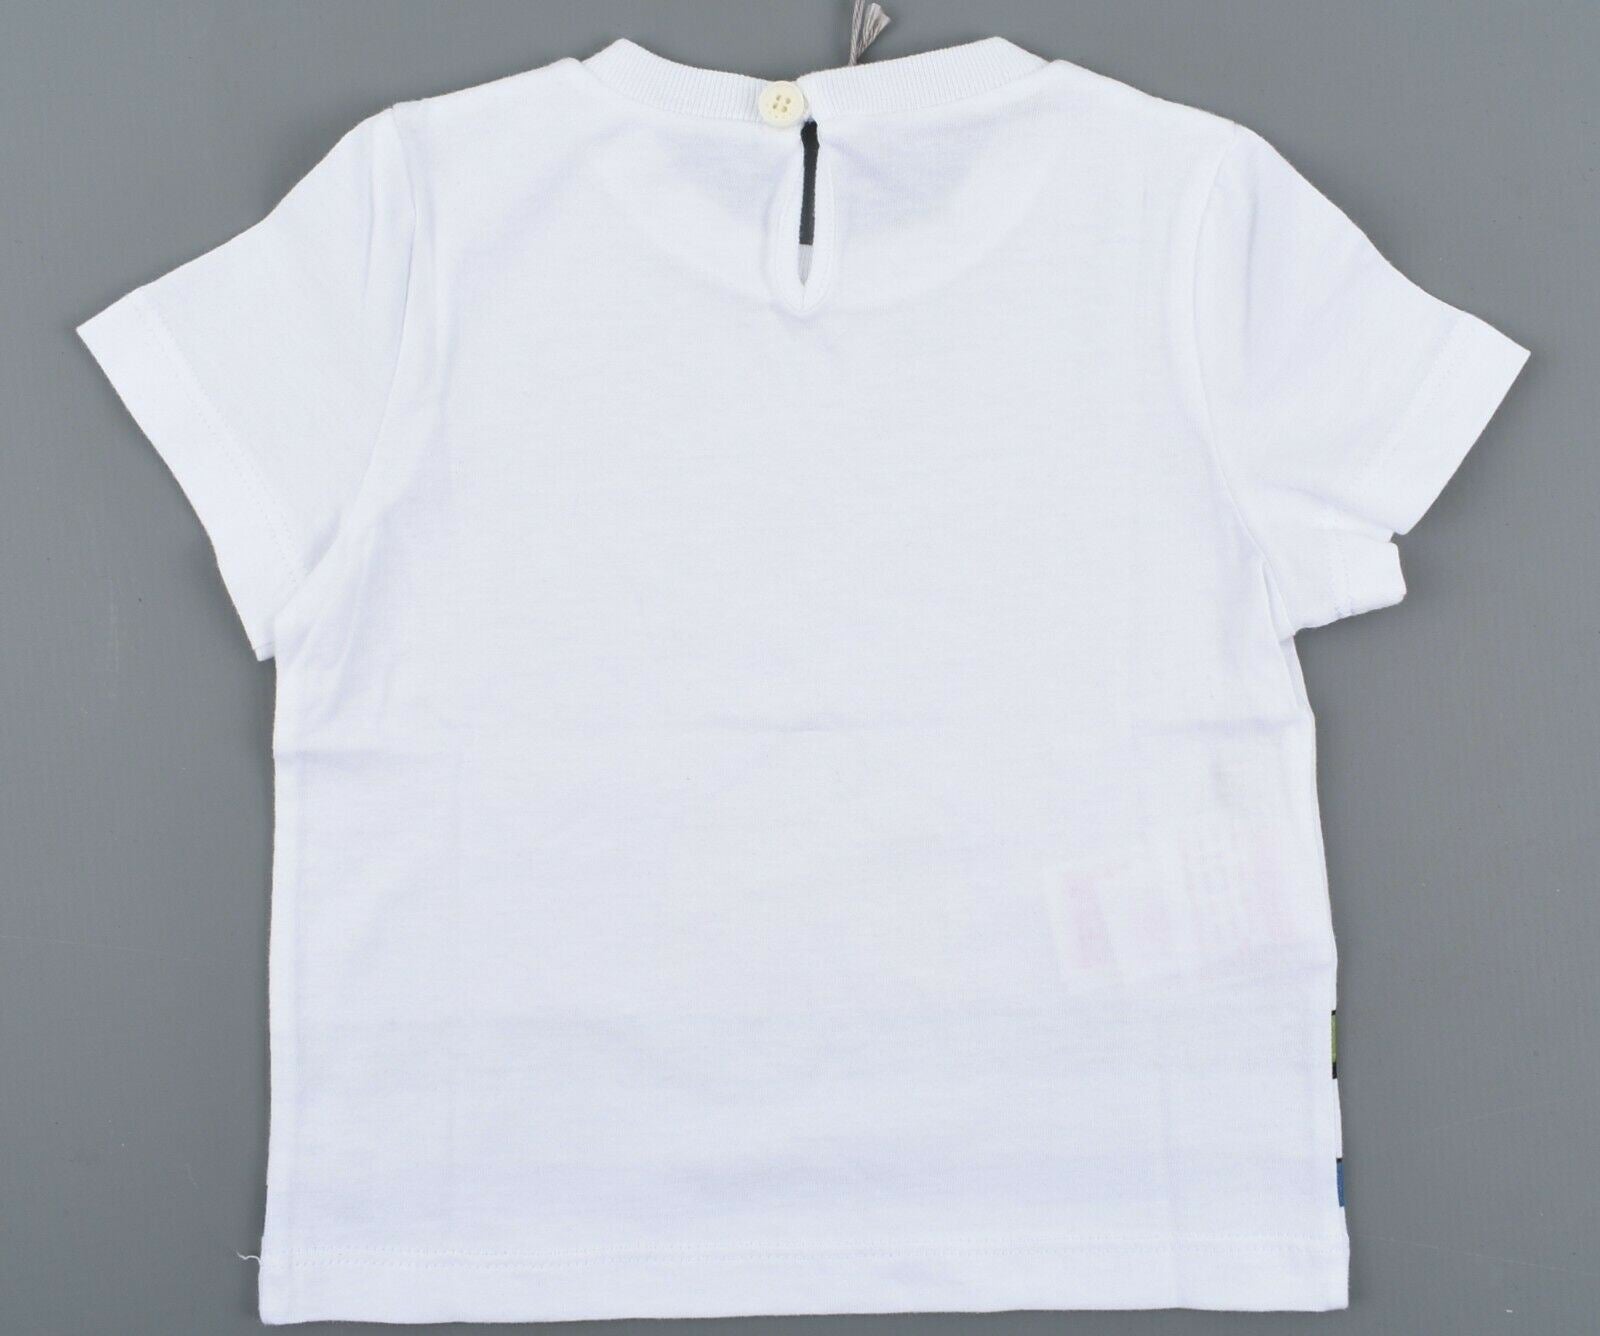 MARNI Baby Boys' Adorable T-shirt, House Print, White, size 9 months